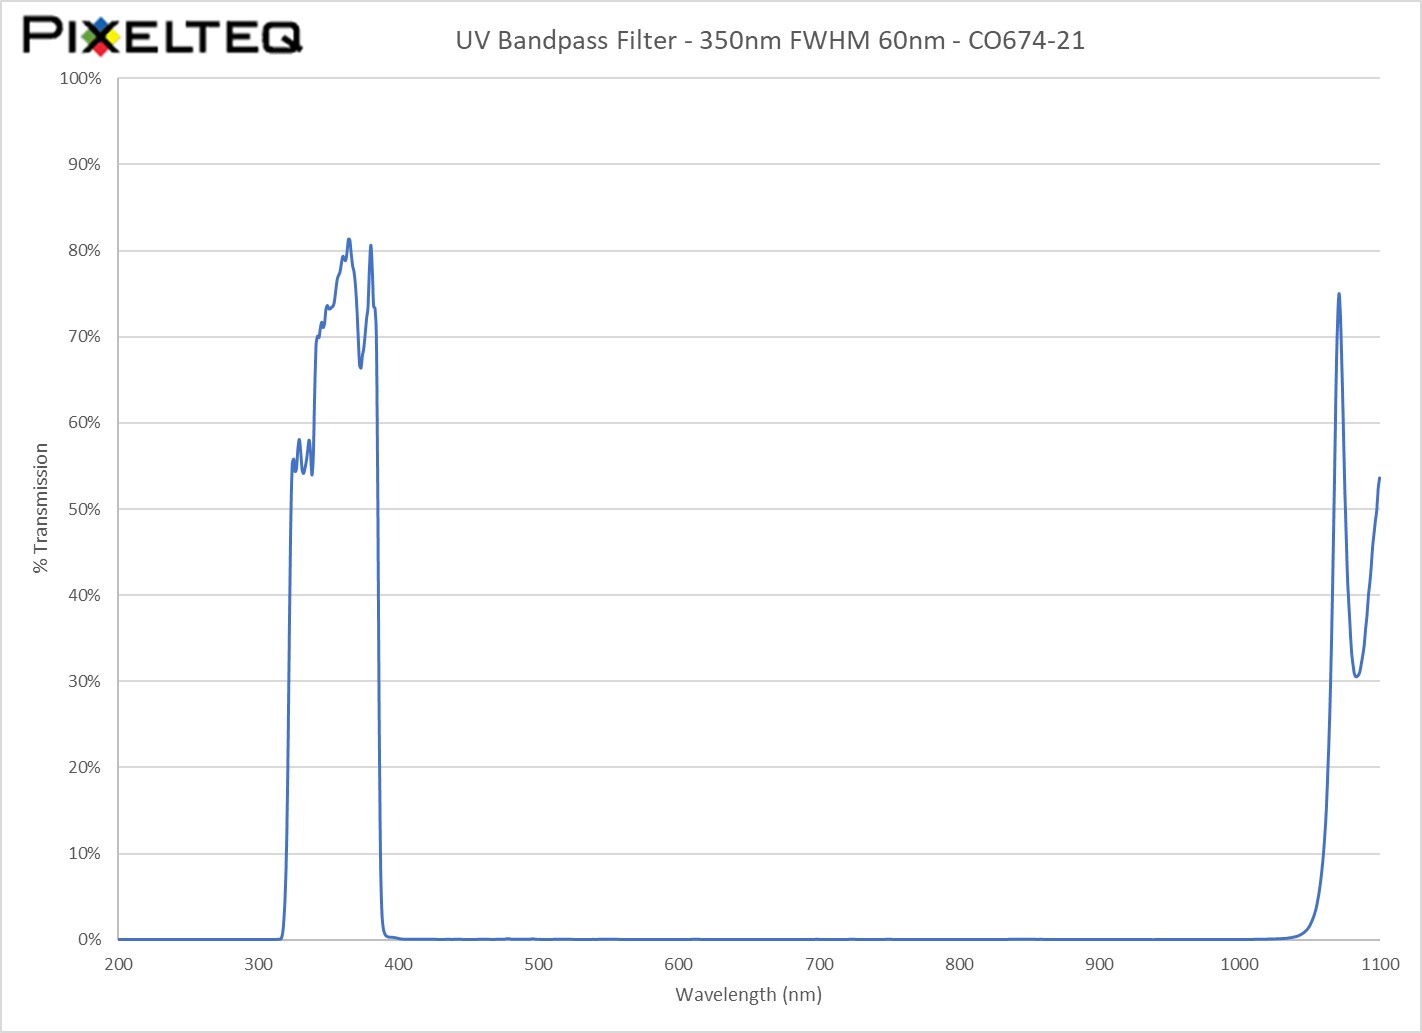 UV Bandpass Filter - 350nm FWHM 60nm - CO674-21